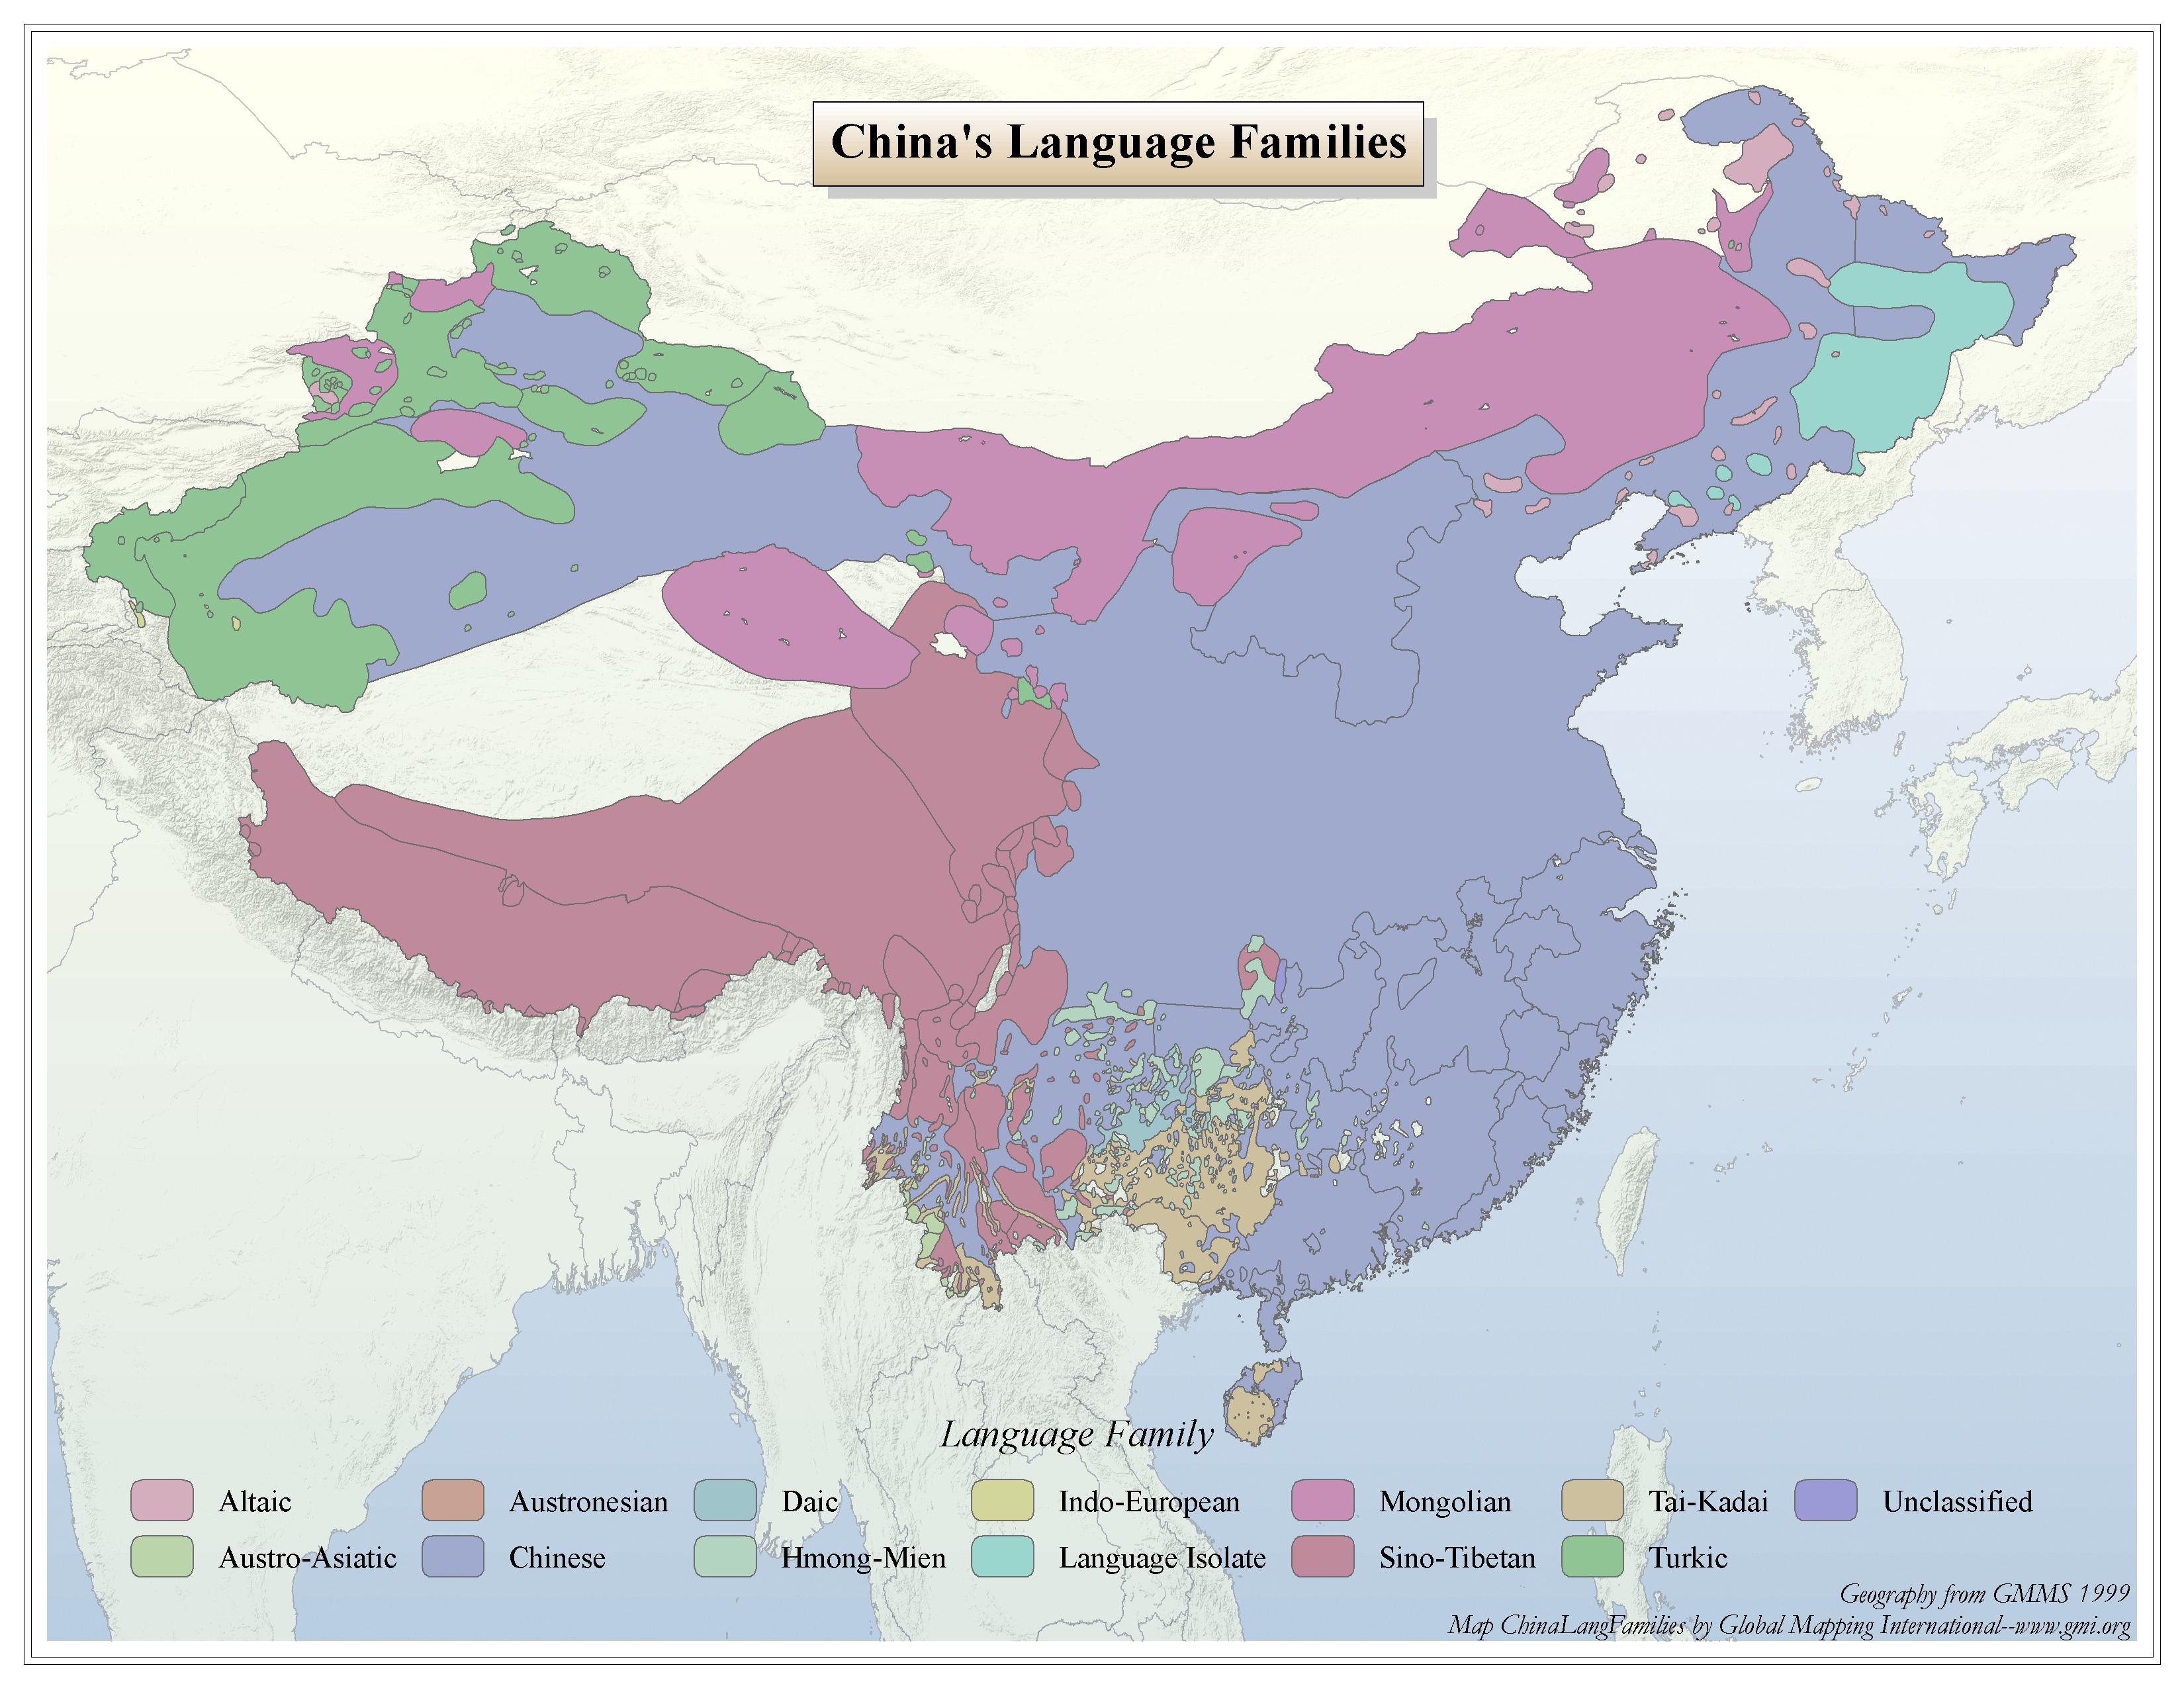 China's Language Families